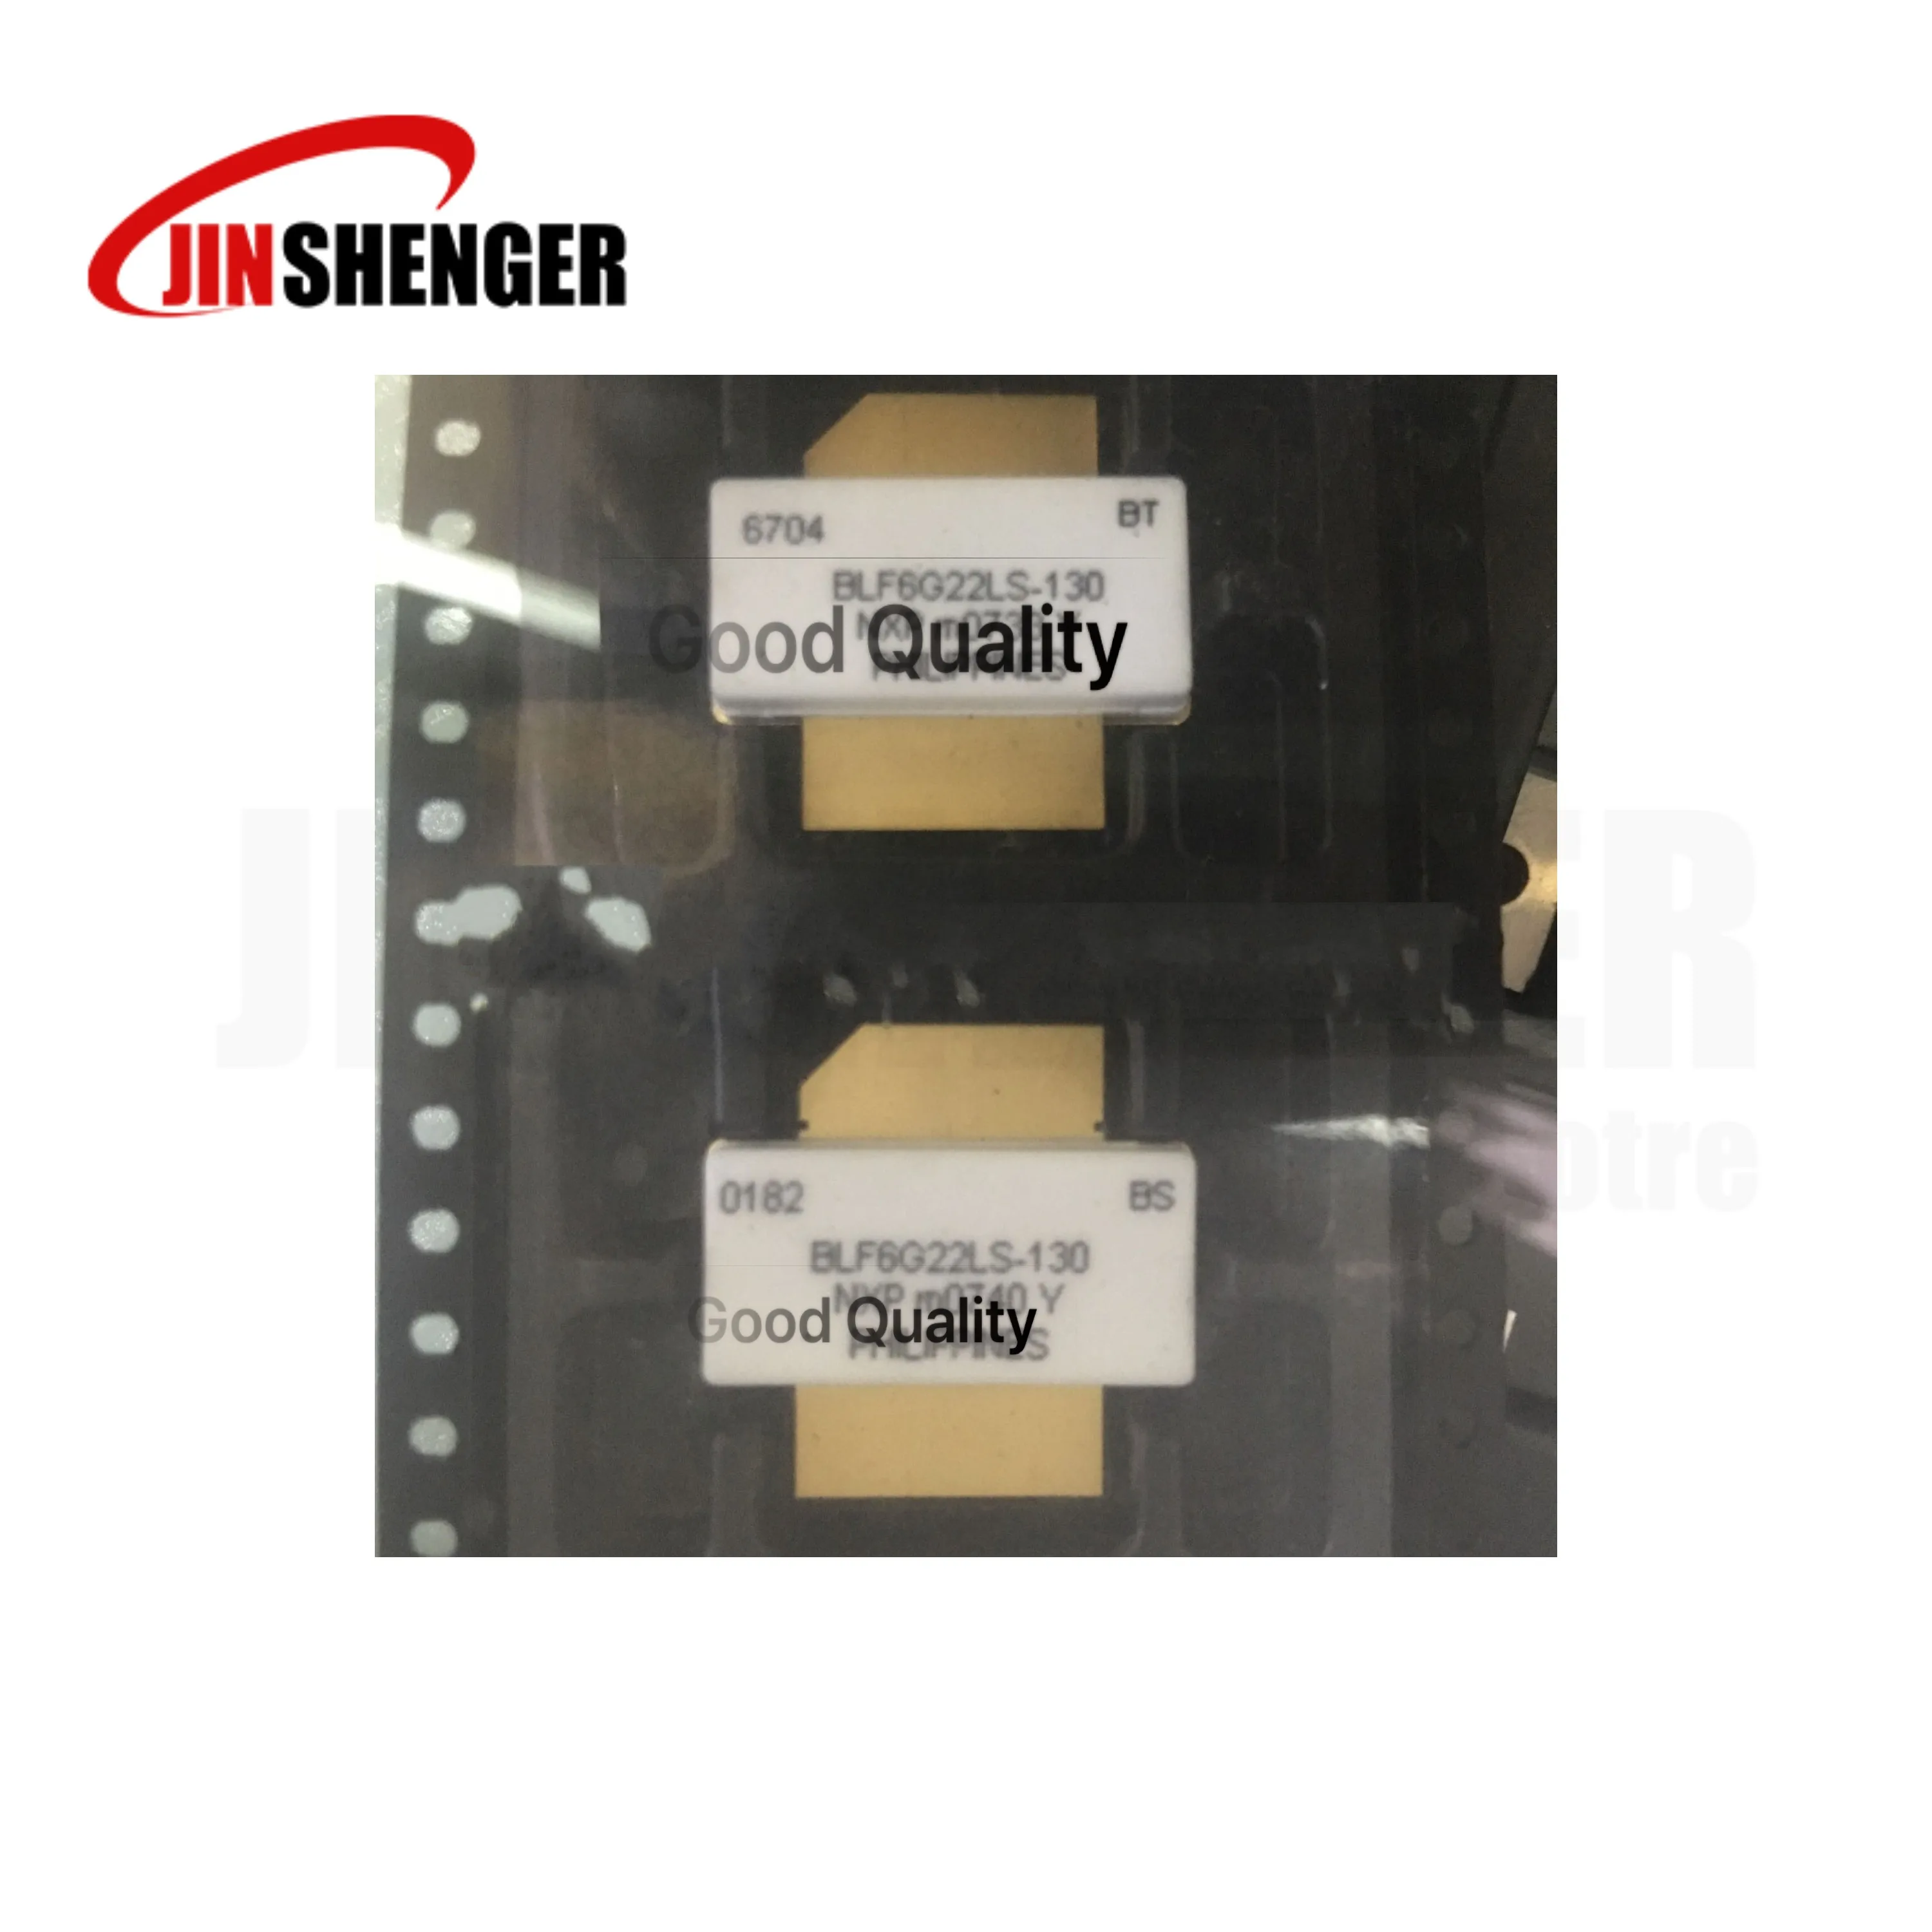 

1PCS Original New Quality assurance BLF6G22LS-130 High frequency tube RF power transistor